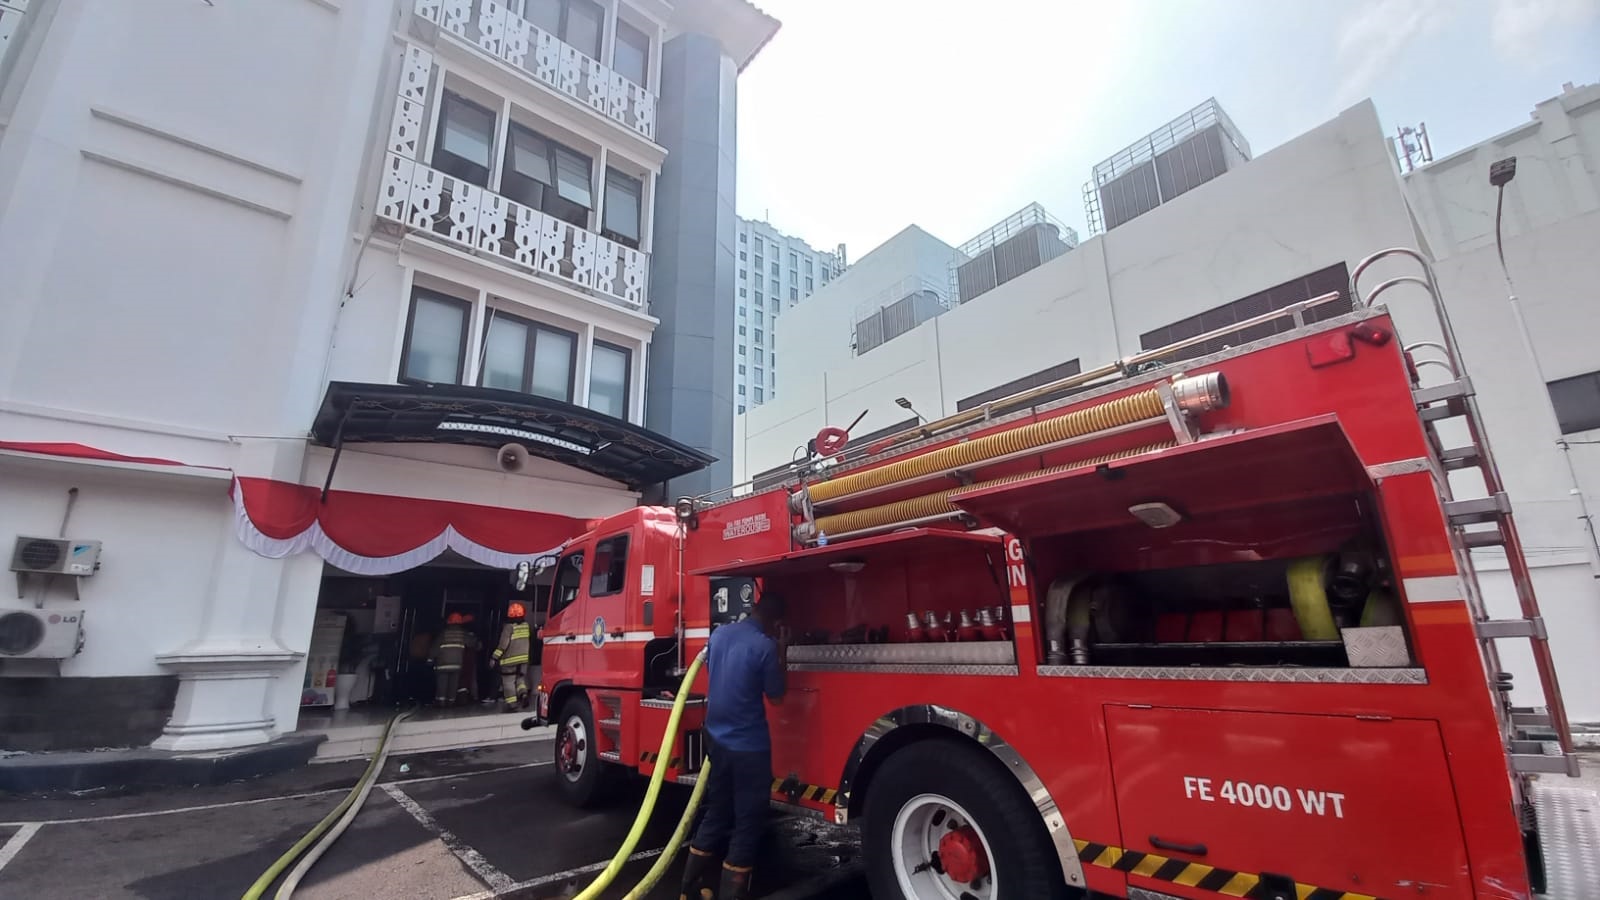 Ruangan Arsip Gedung DPRD Jabar Terbakar, 10 Mobil Damkar Diterjunkan